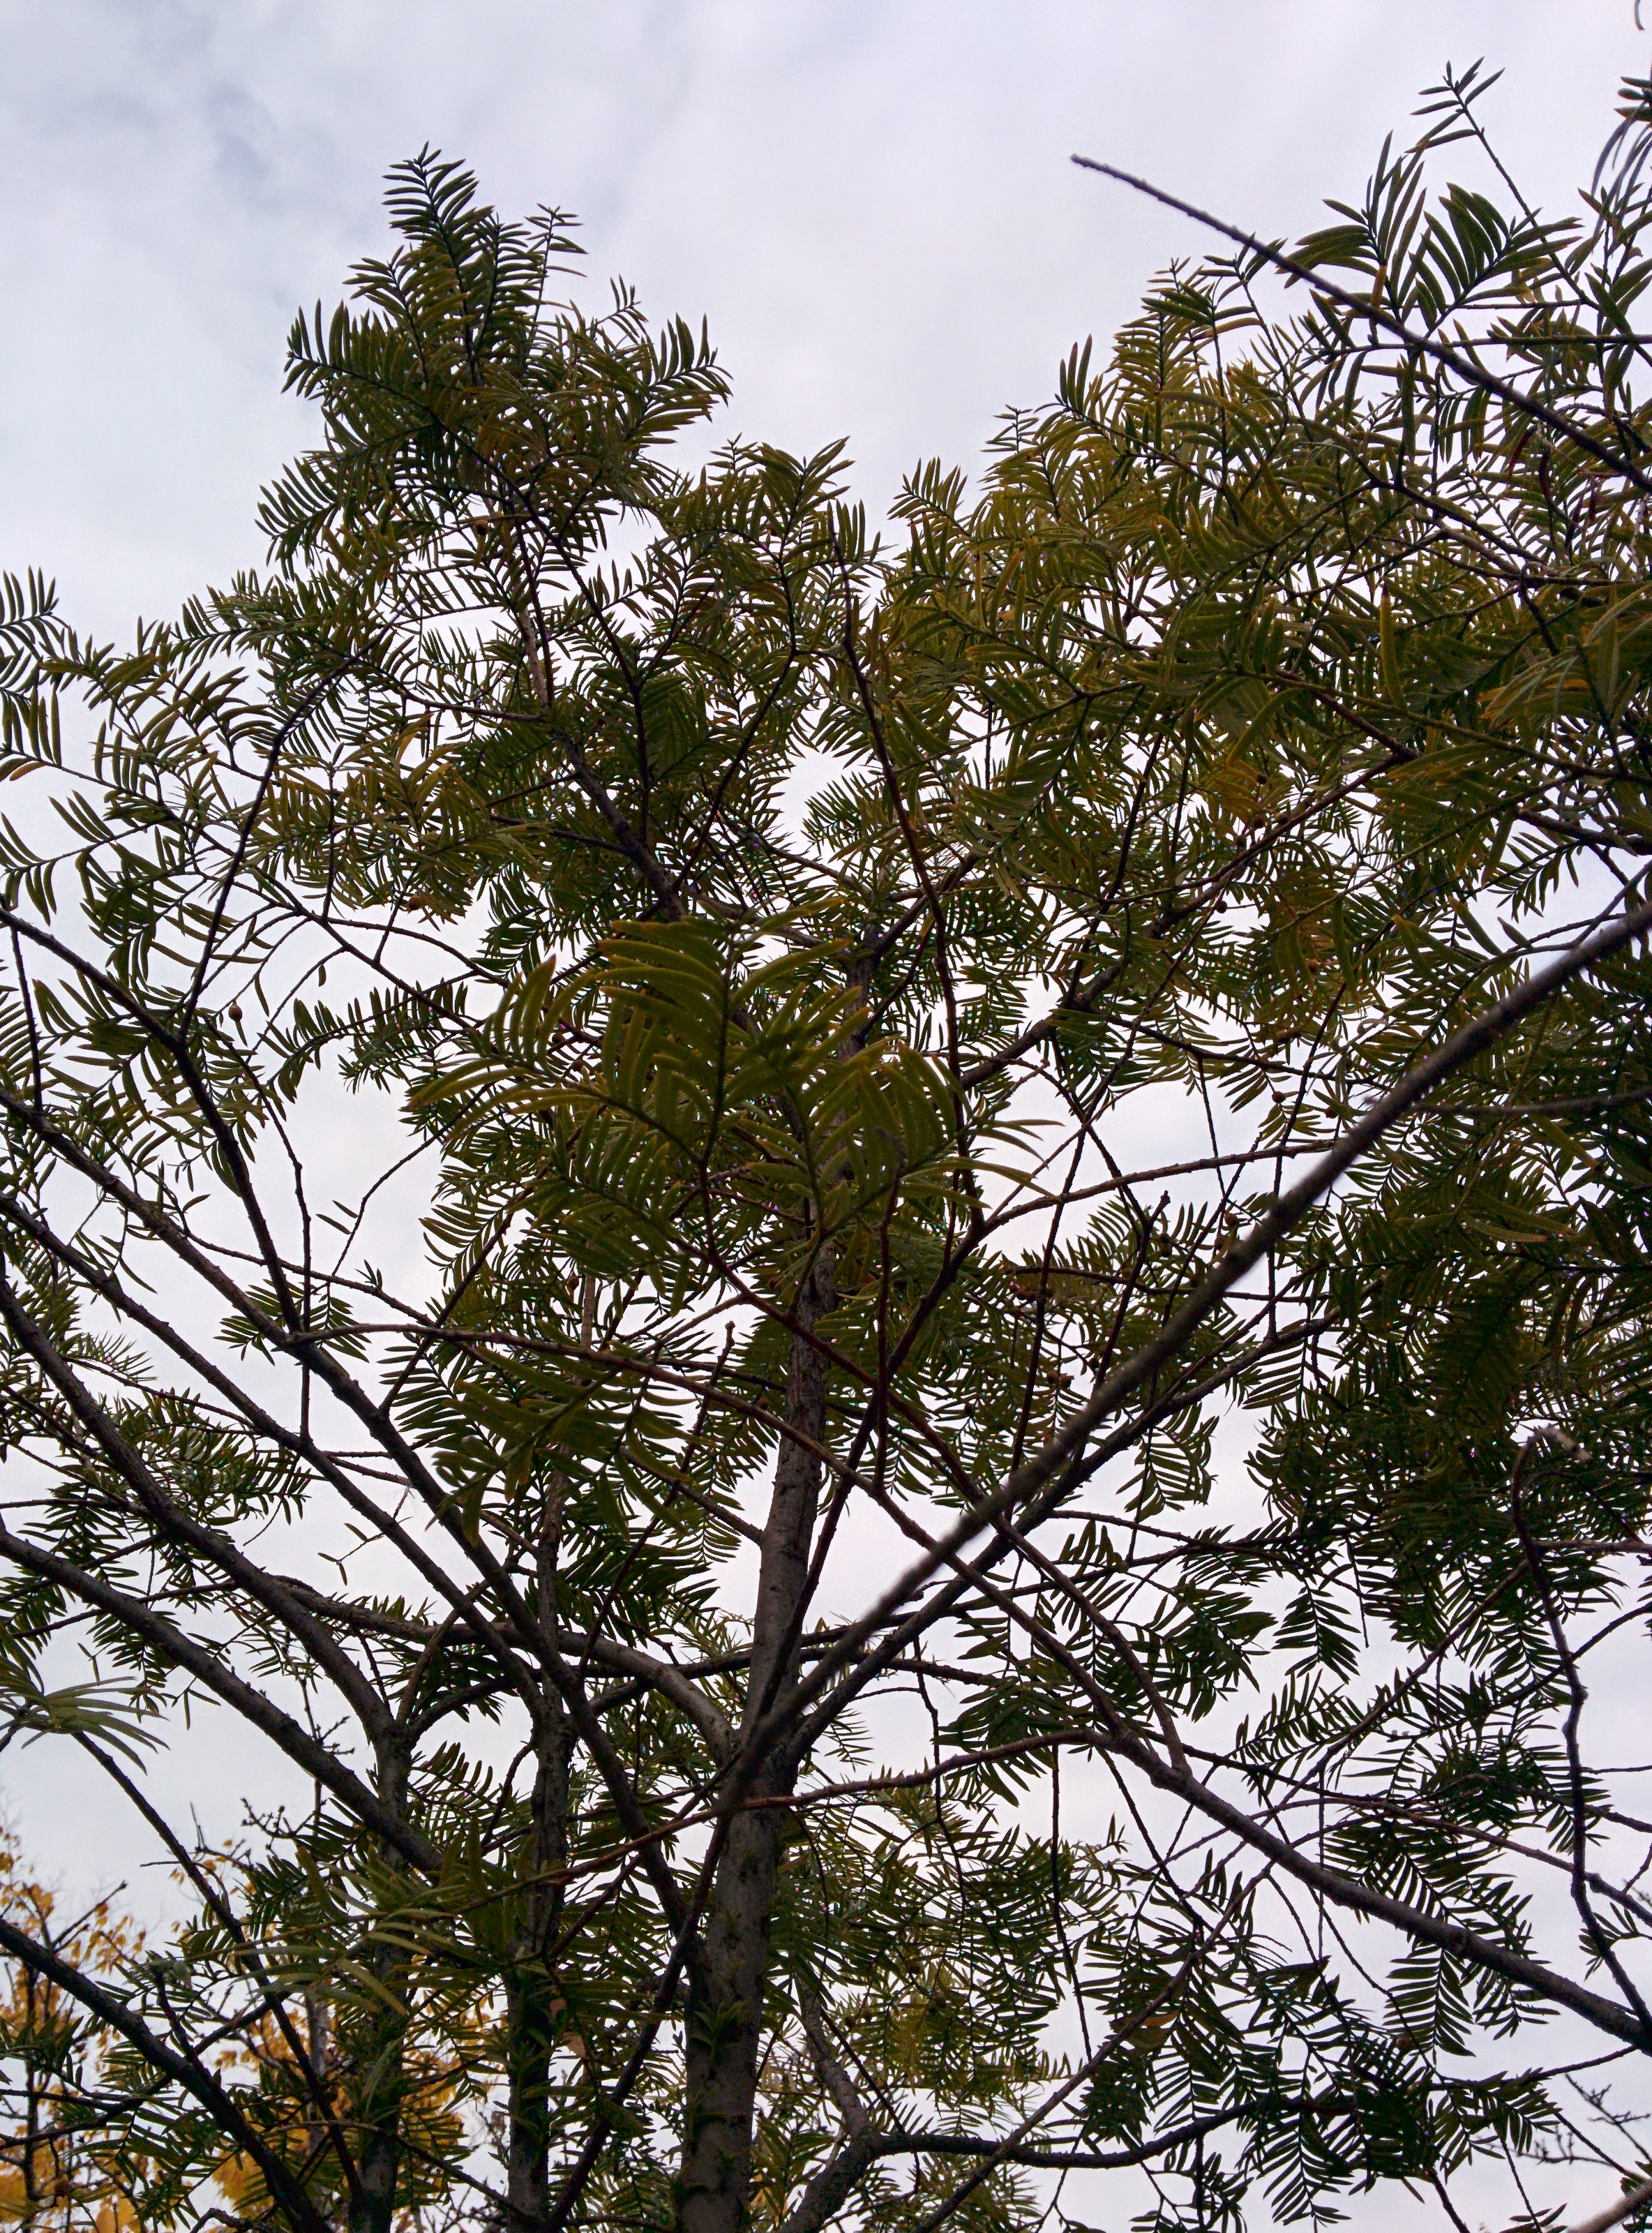 IMG_20151106_141622.jpg 잎이 비교적 넓은 개비자나무